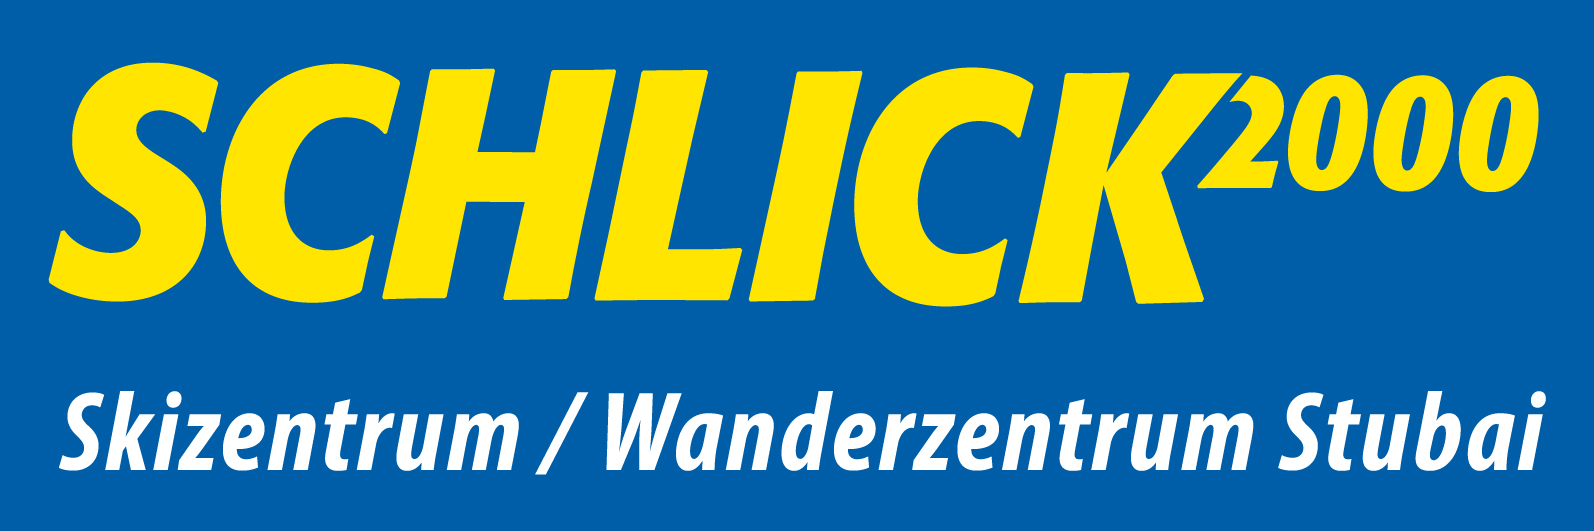 Schlick 2000 logo